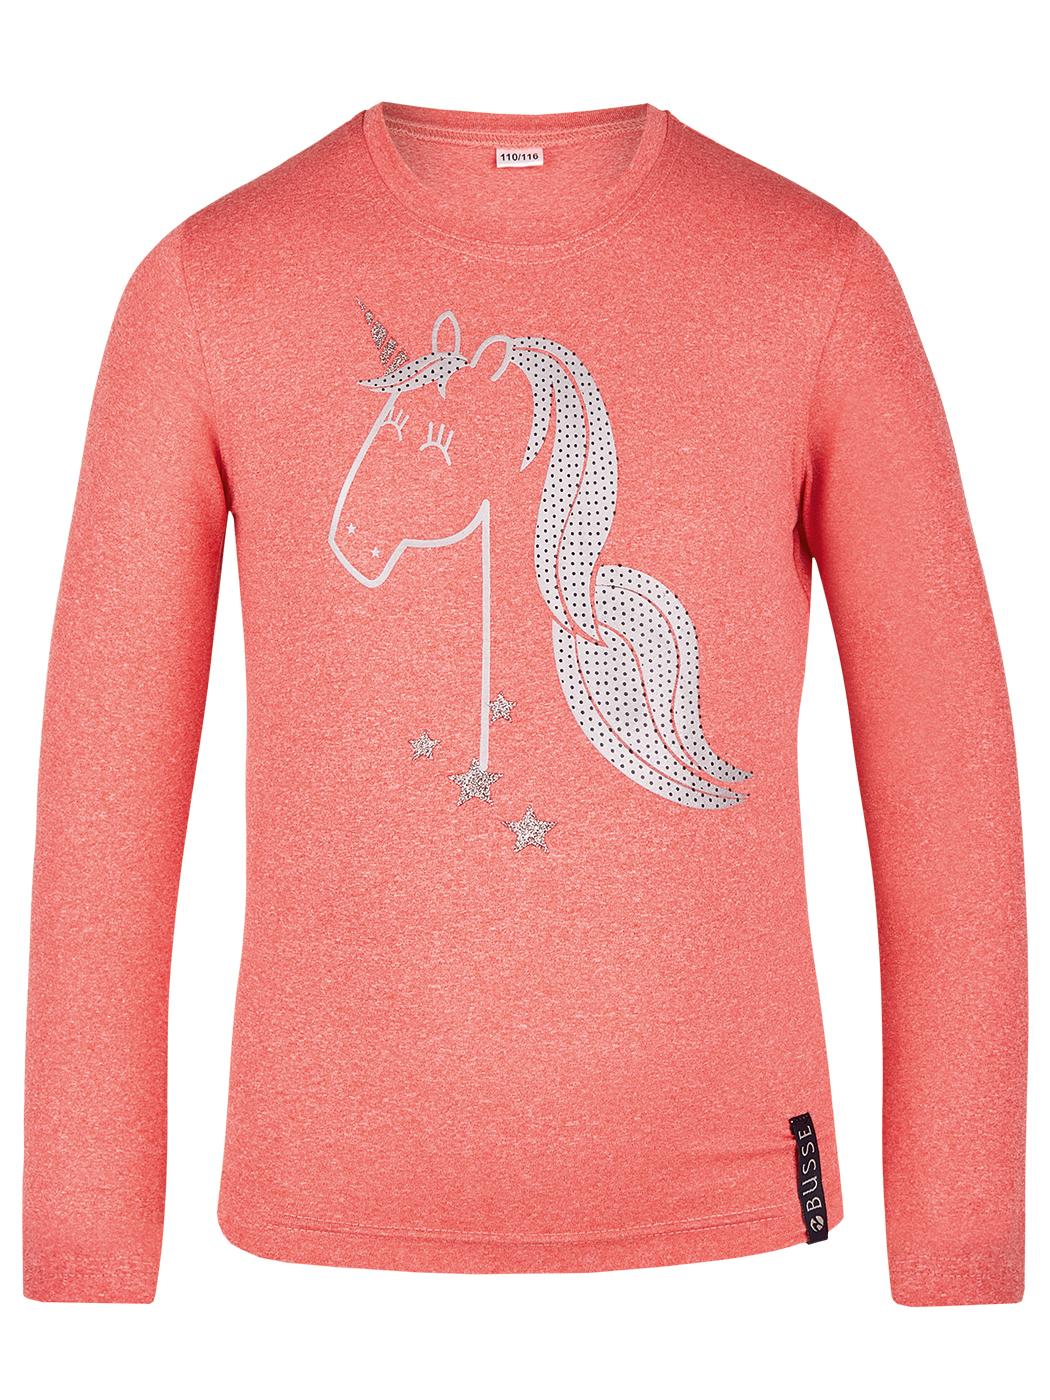 Image of BUSSE Shirt Kids Collection Kinder LS VIII - coral (unicorn)